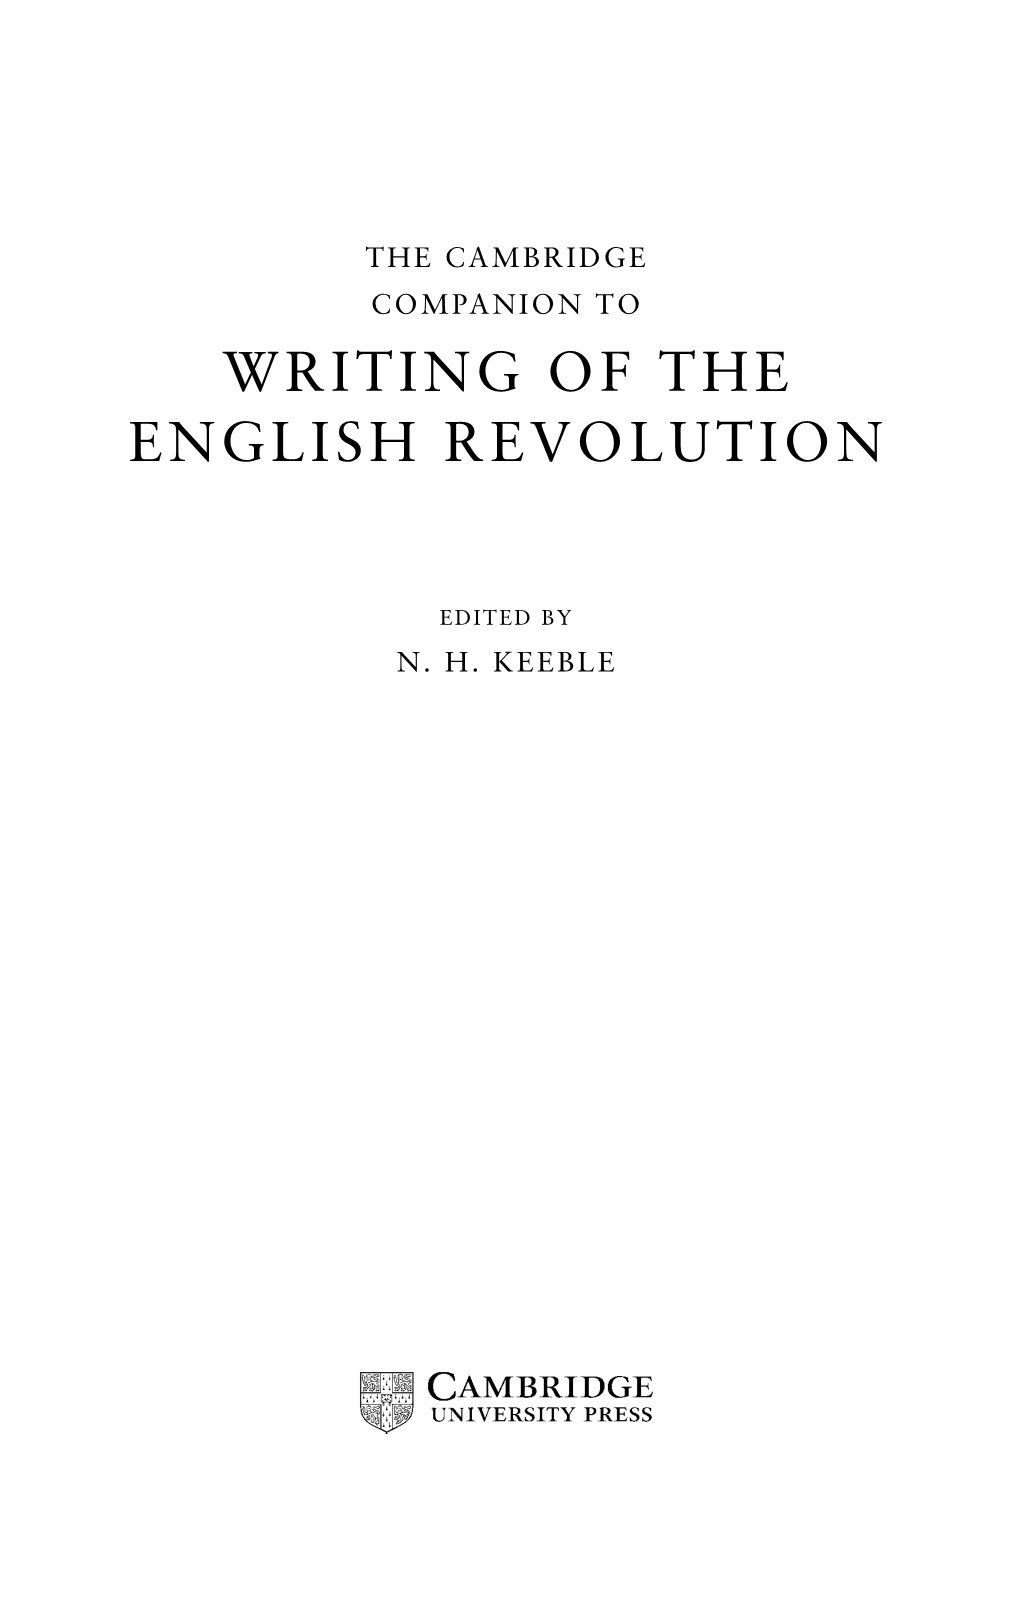 Writing of the English Revolution